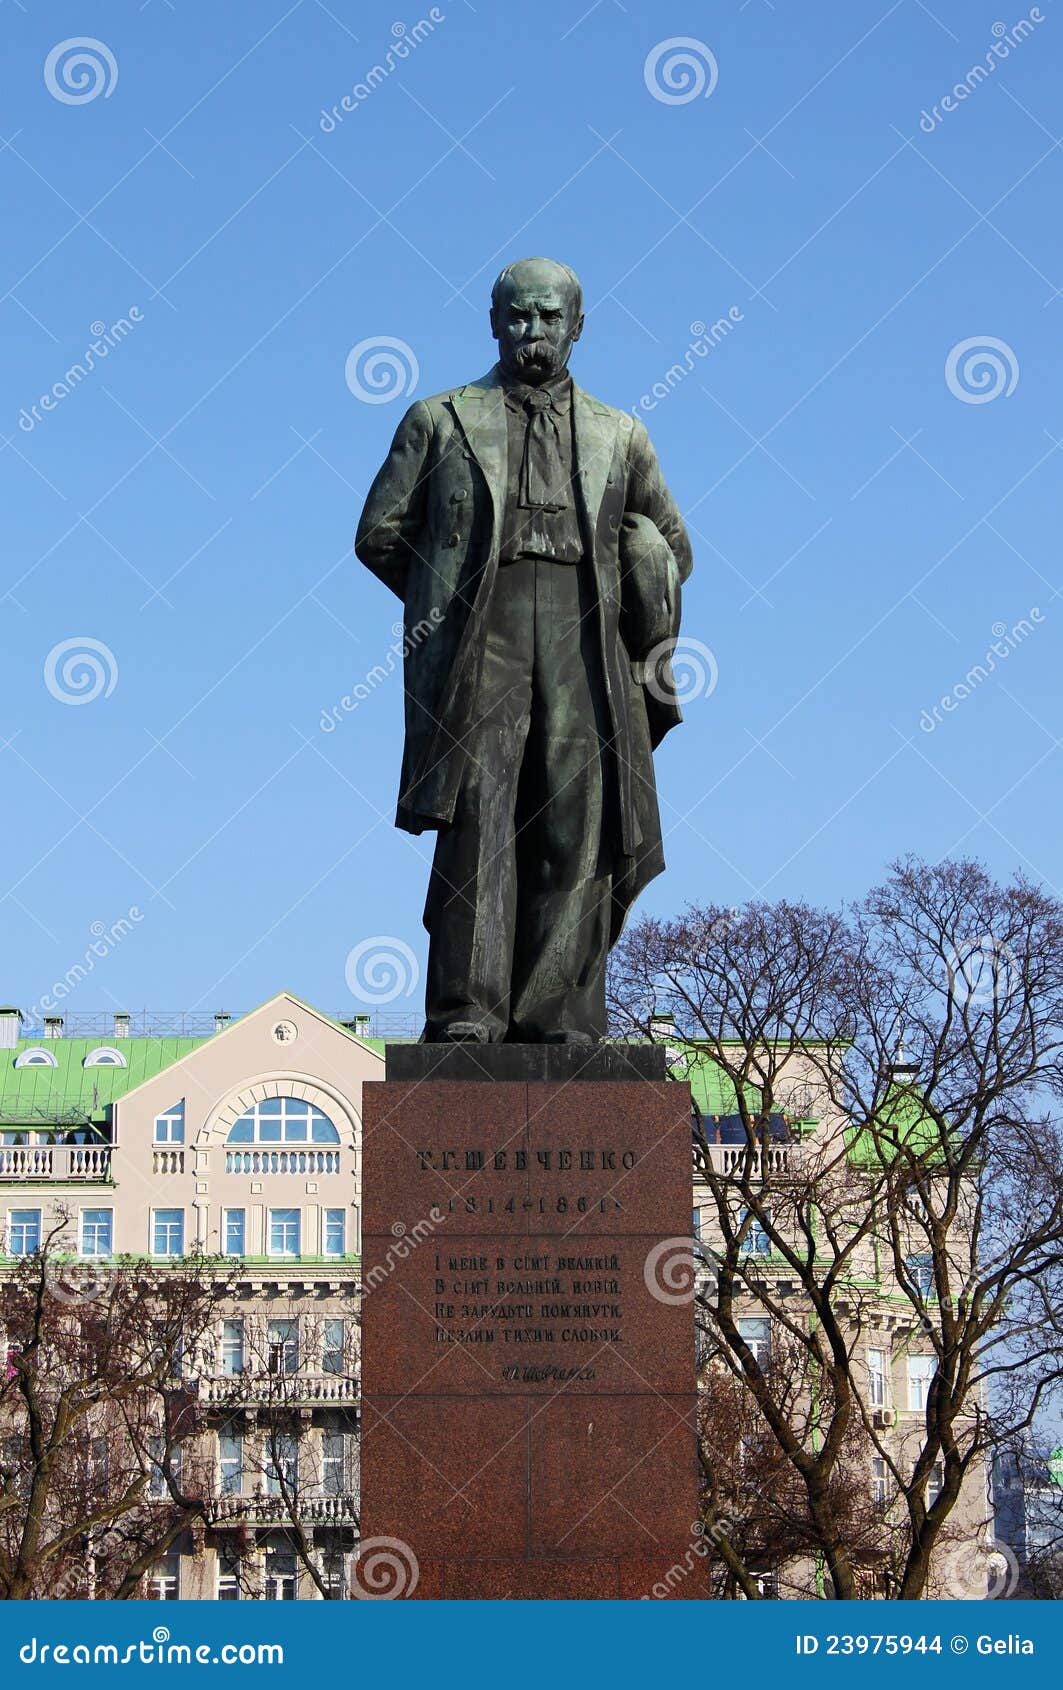 taras shevchenko monument